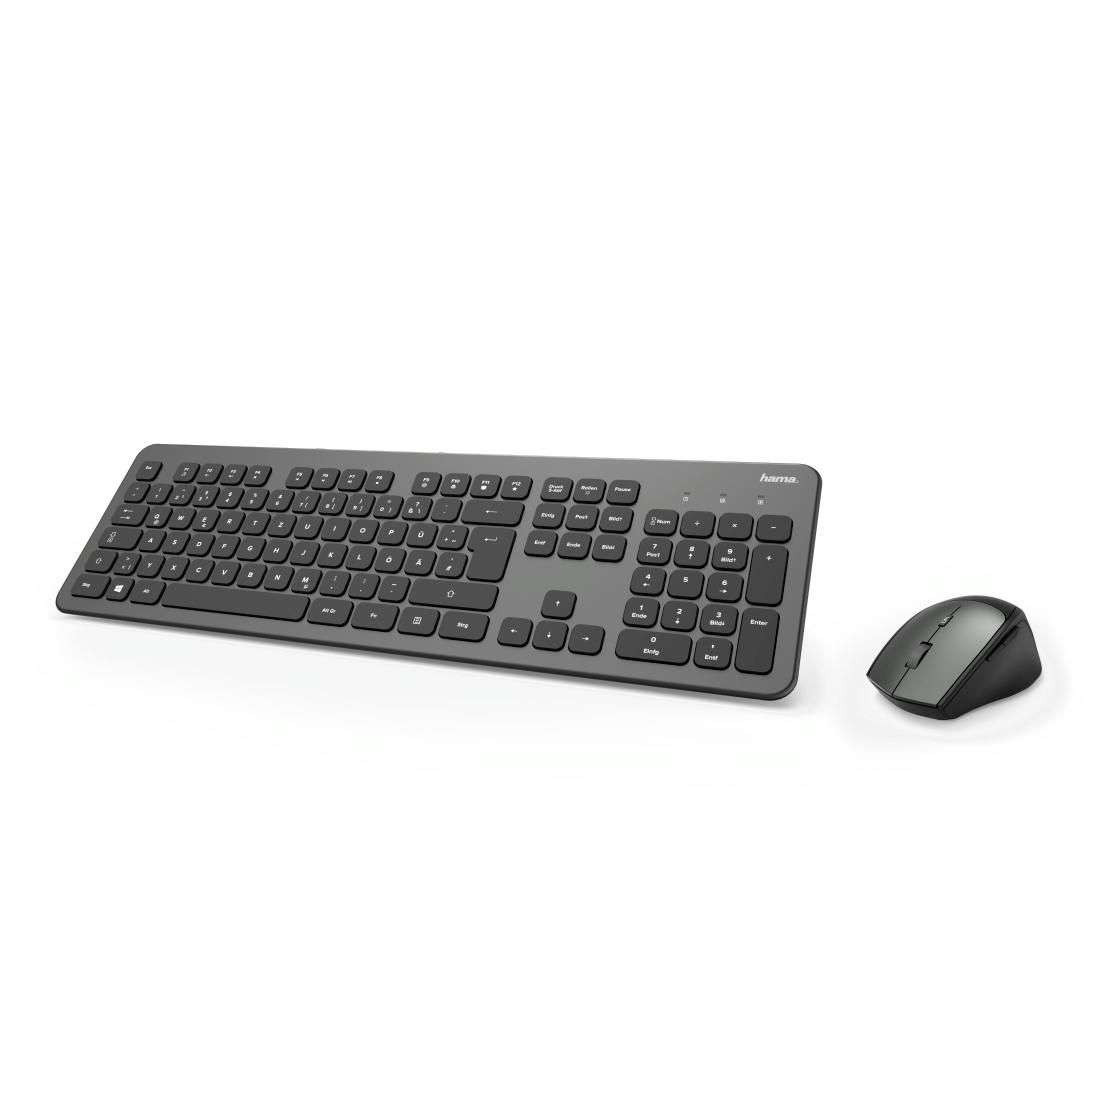 Hama 182677 W128268134 Kmw-700 Keyboard Mouse 